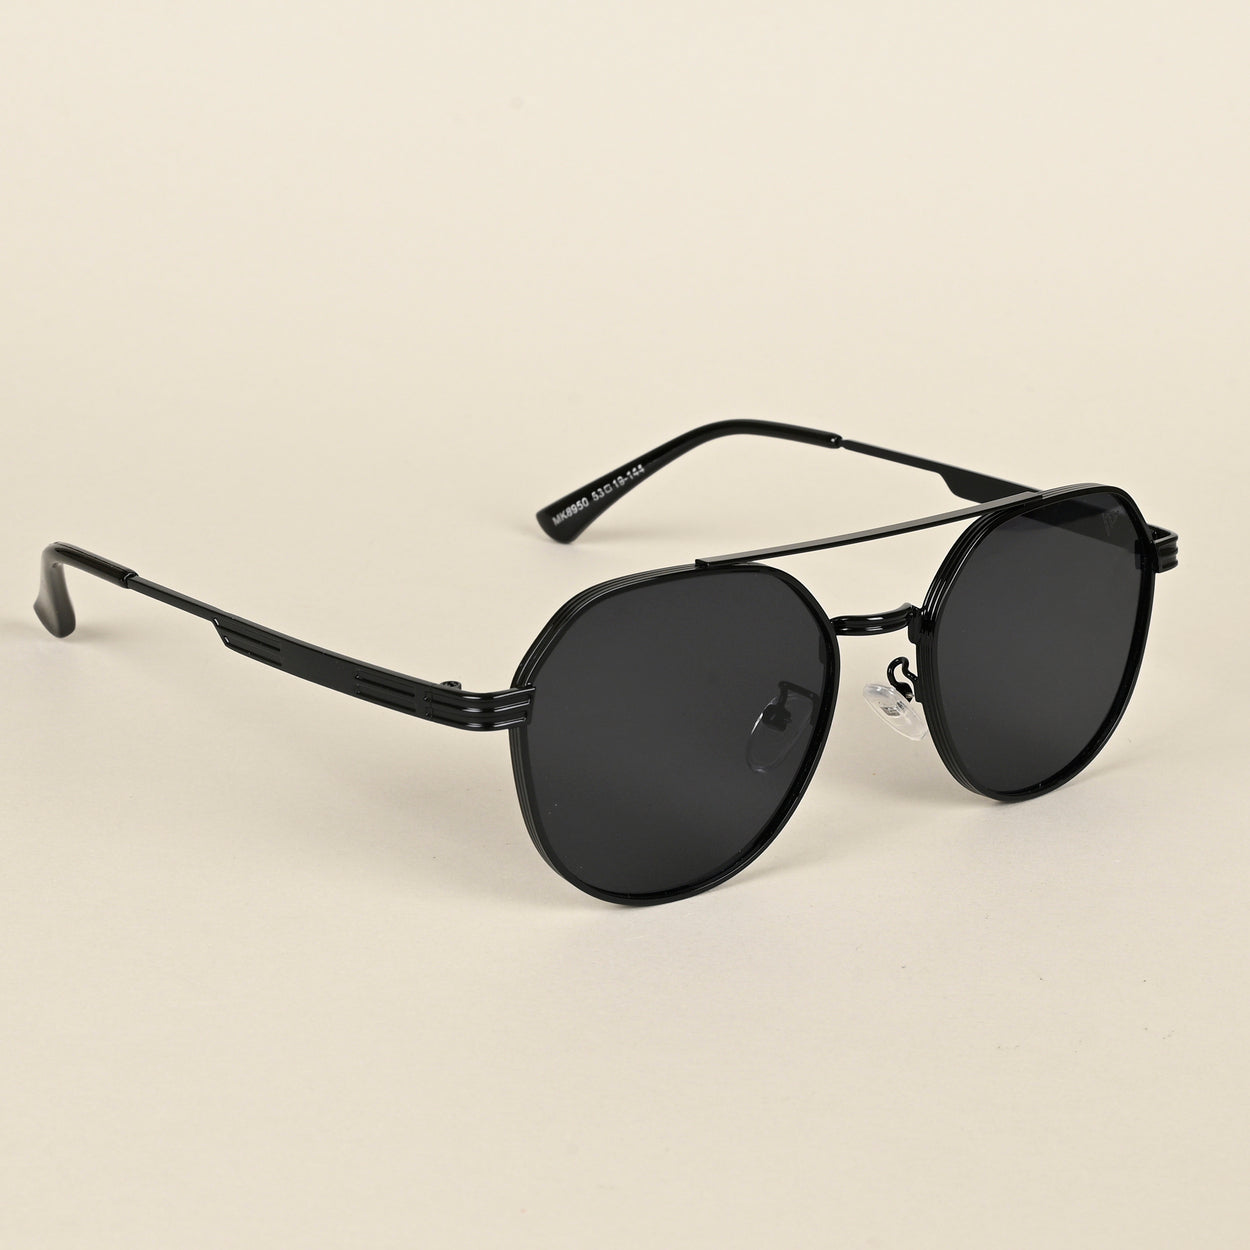 Voyage Black Round Sunglasses for Men & Women (8950MG4331)